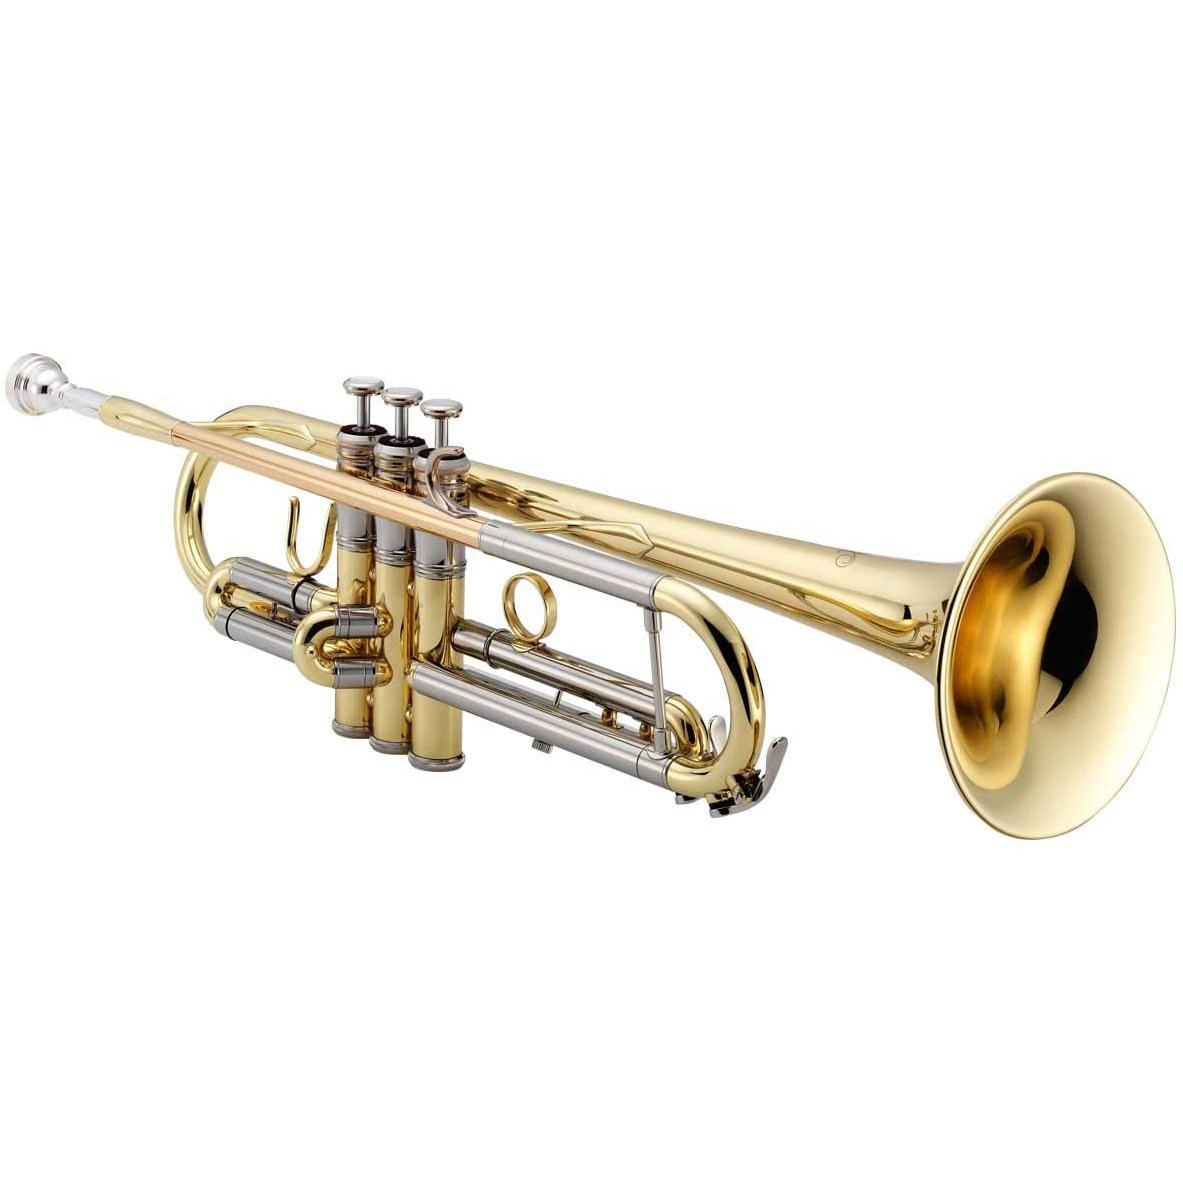 Звук музыкальной трубы. Труба BB Jupiter JTR-500s. Roy Benson tr-101 BB труба. Jupiter JTR-700a - труба BB. Труба BB J. Michael tr-200.